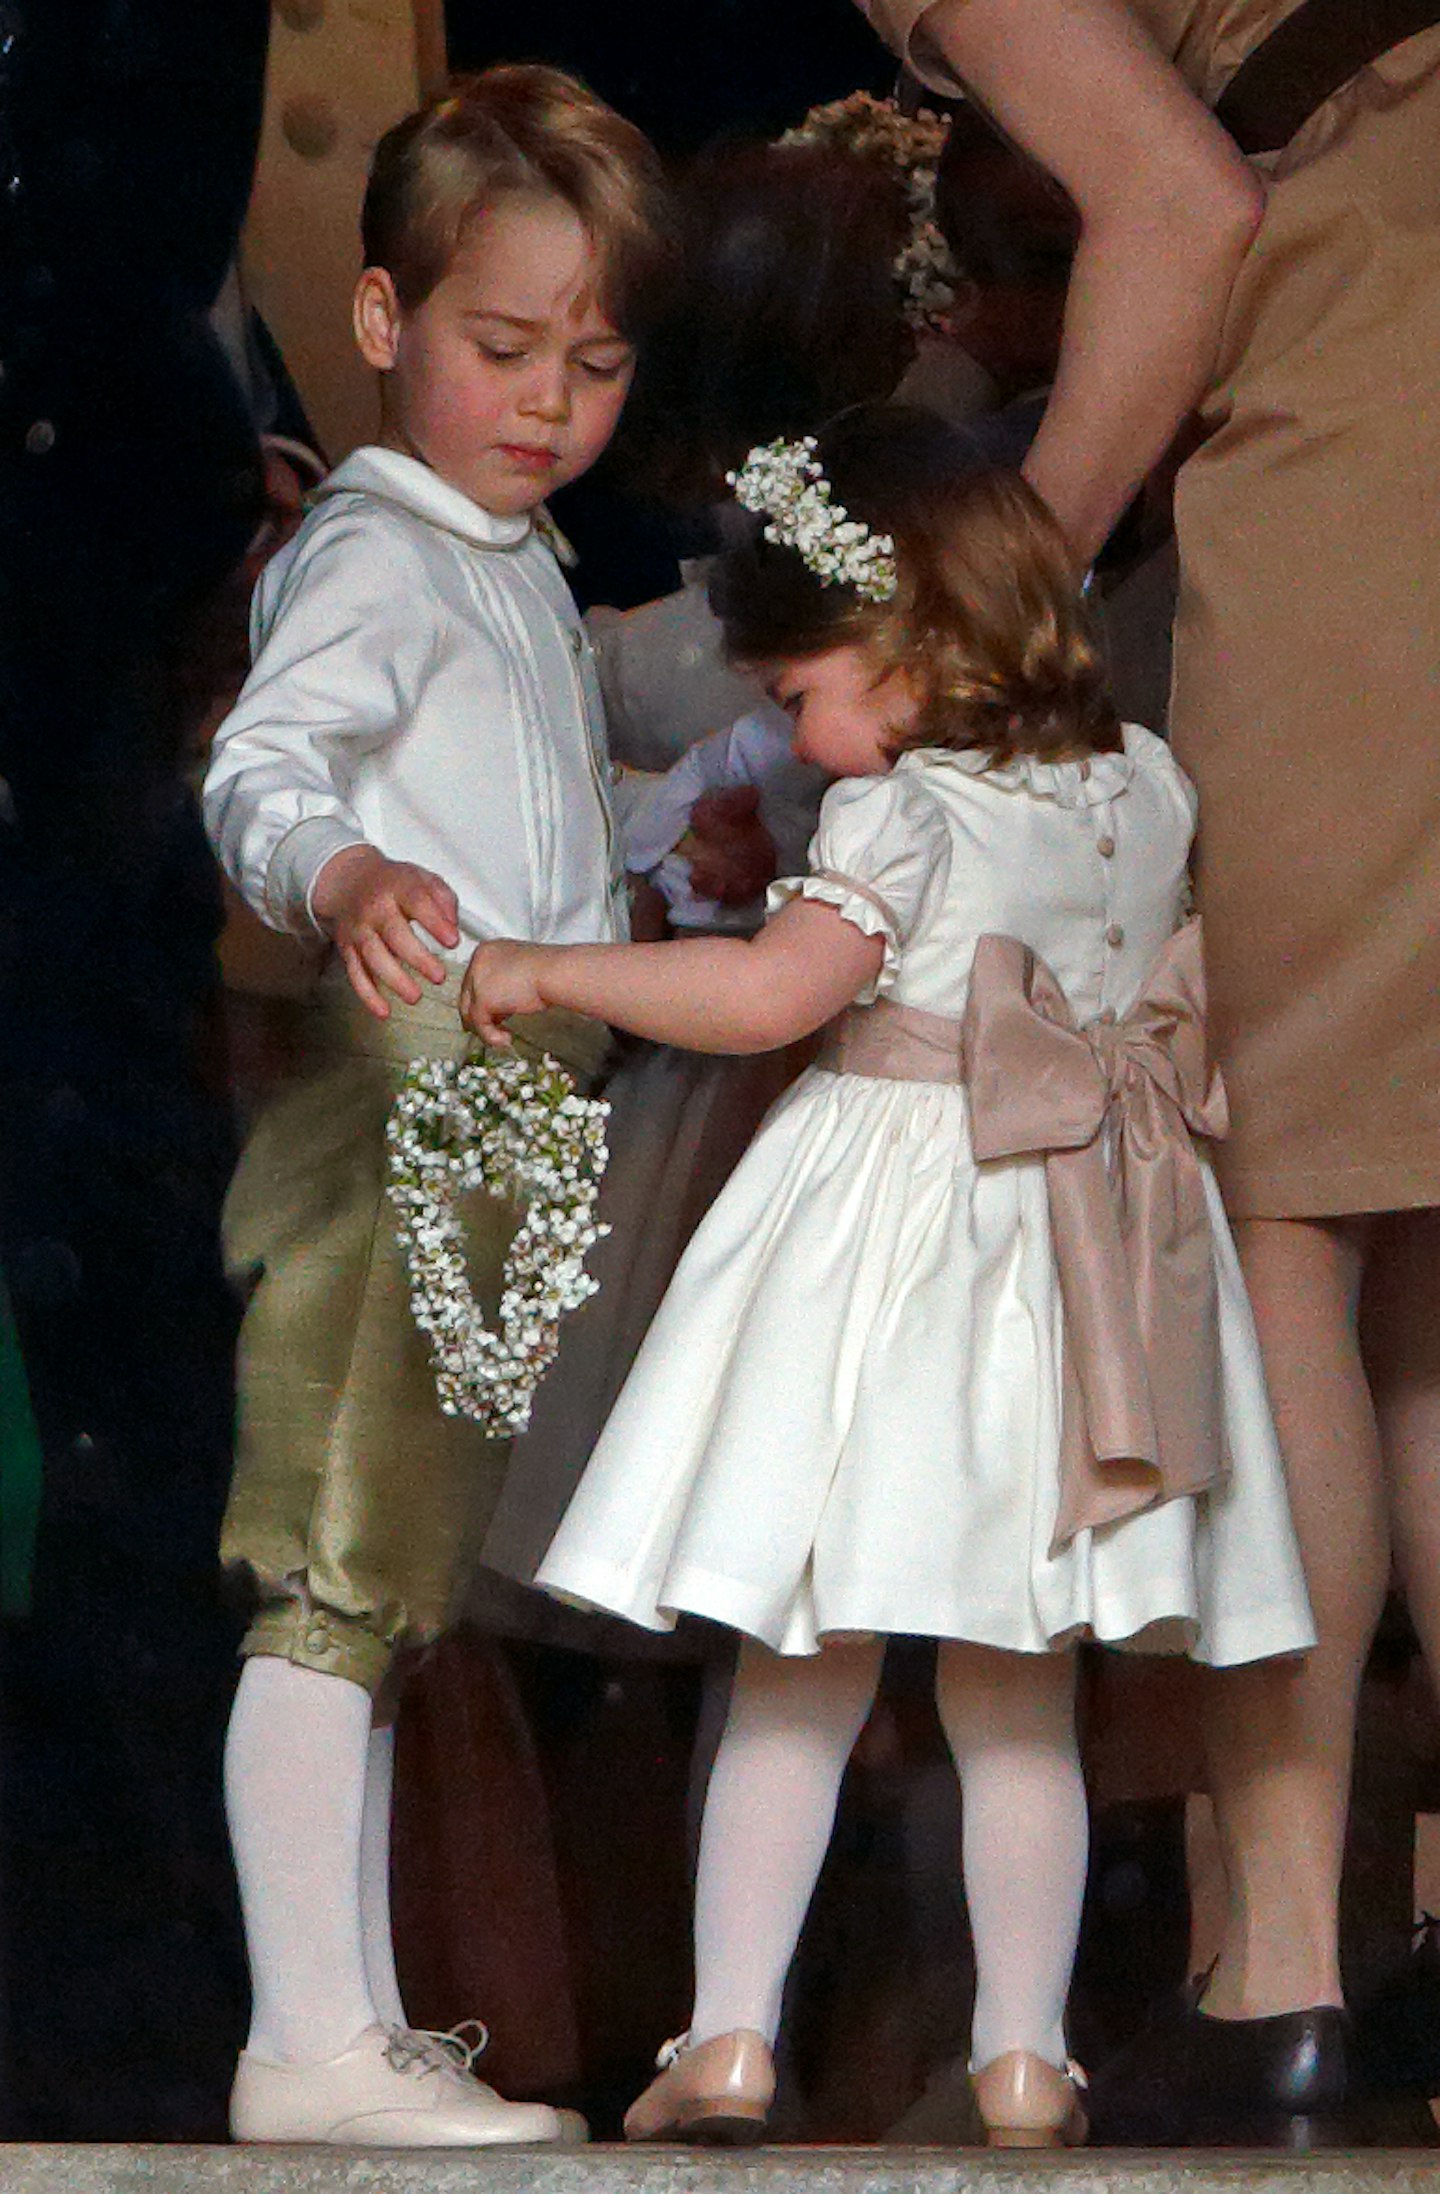 Prince George and Princess Charlotte in Pepa & Co